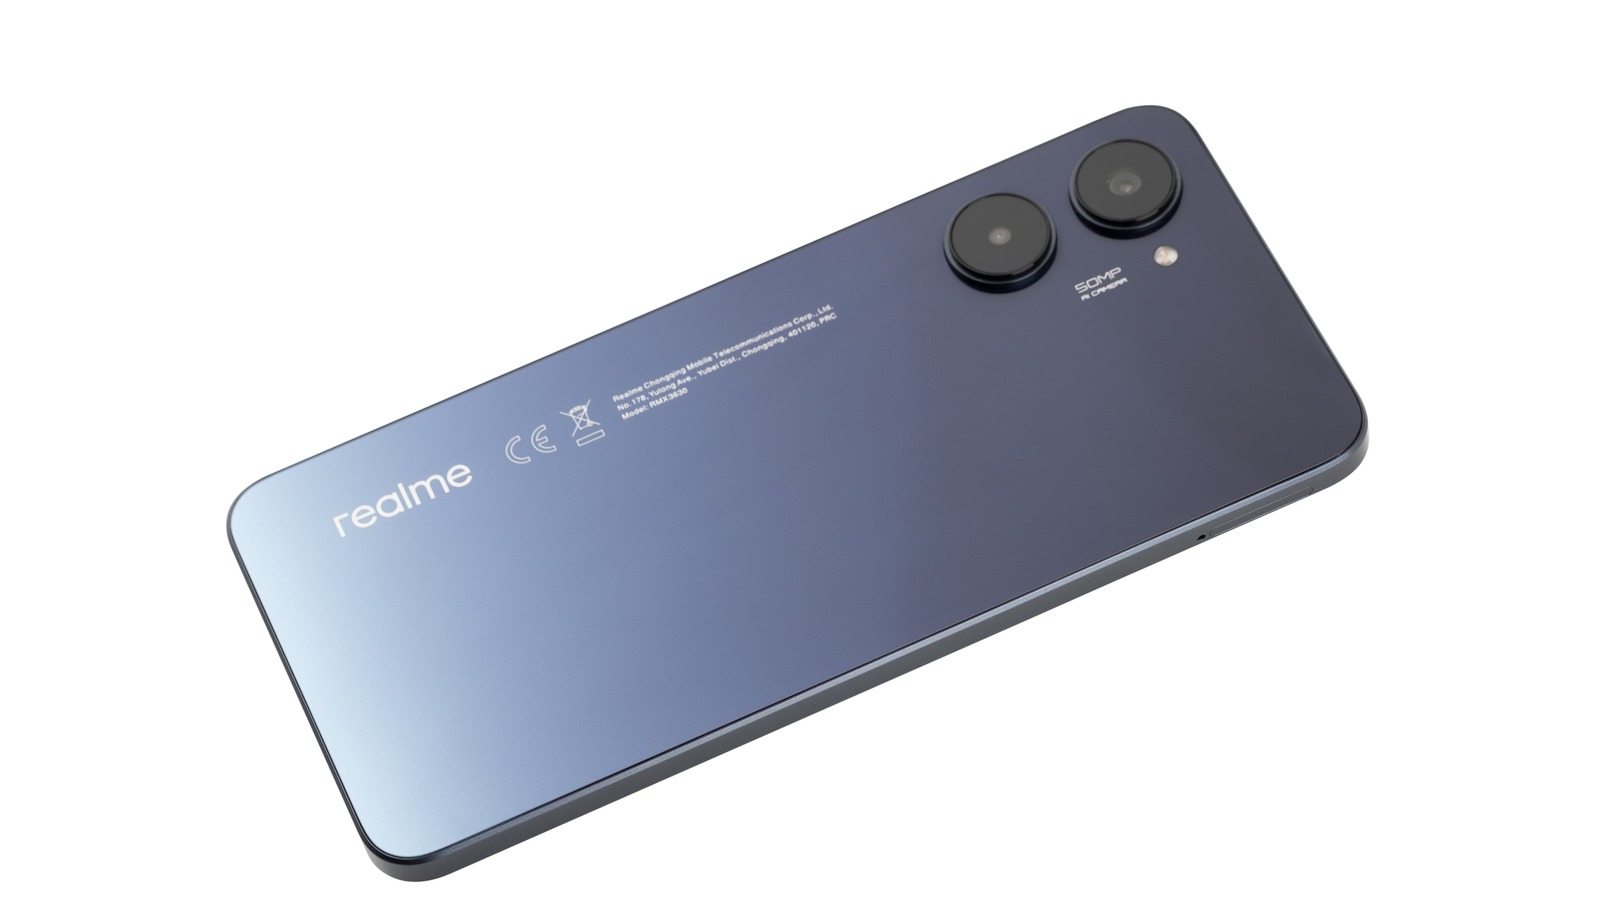 Realme 10 Pro 5G Smartphone: Impressive 108MP Camera and Powerful Battery -  TheAuto